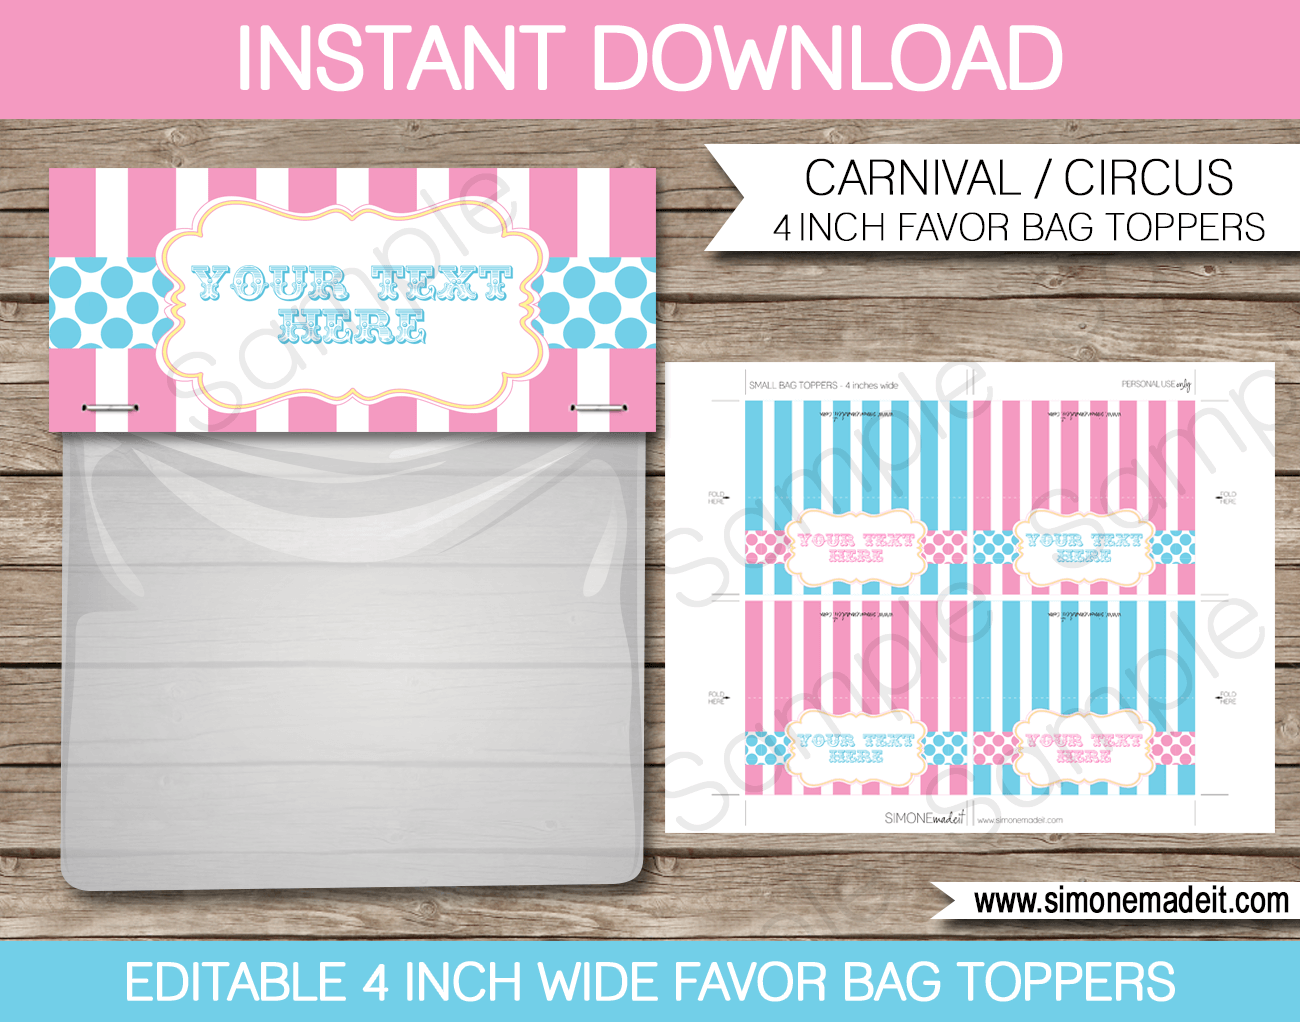 Pink & Aqua Editable Carnival Favor Bag Toppers | Circus | Birthday Party | Printable DIY Template | $3.00 INSTANT DOWNLOAD via SIMONEmadeit.com